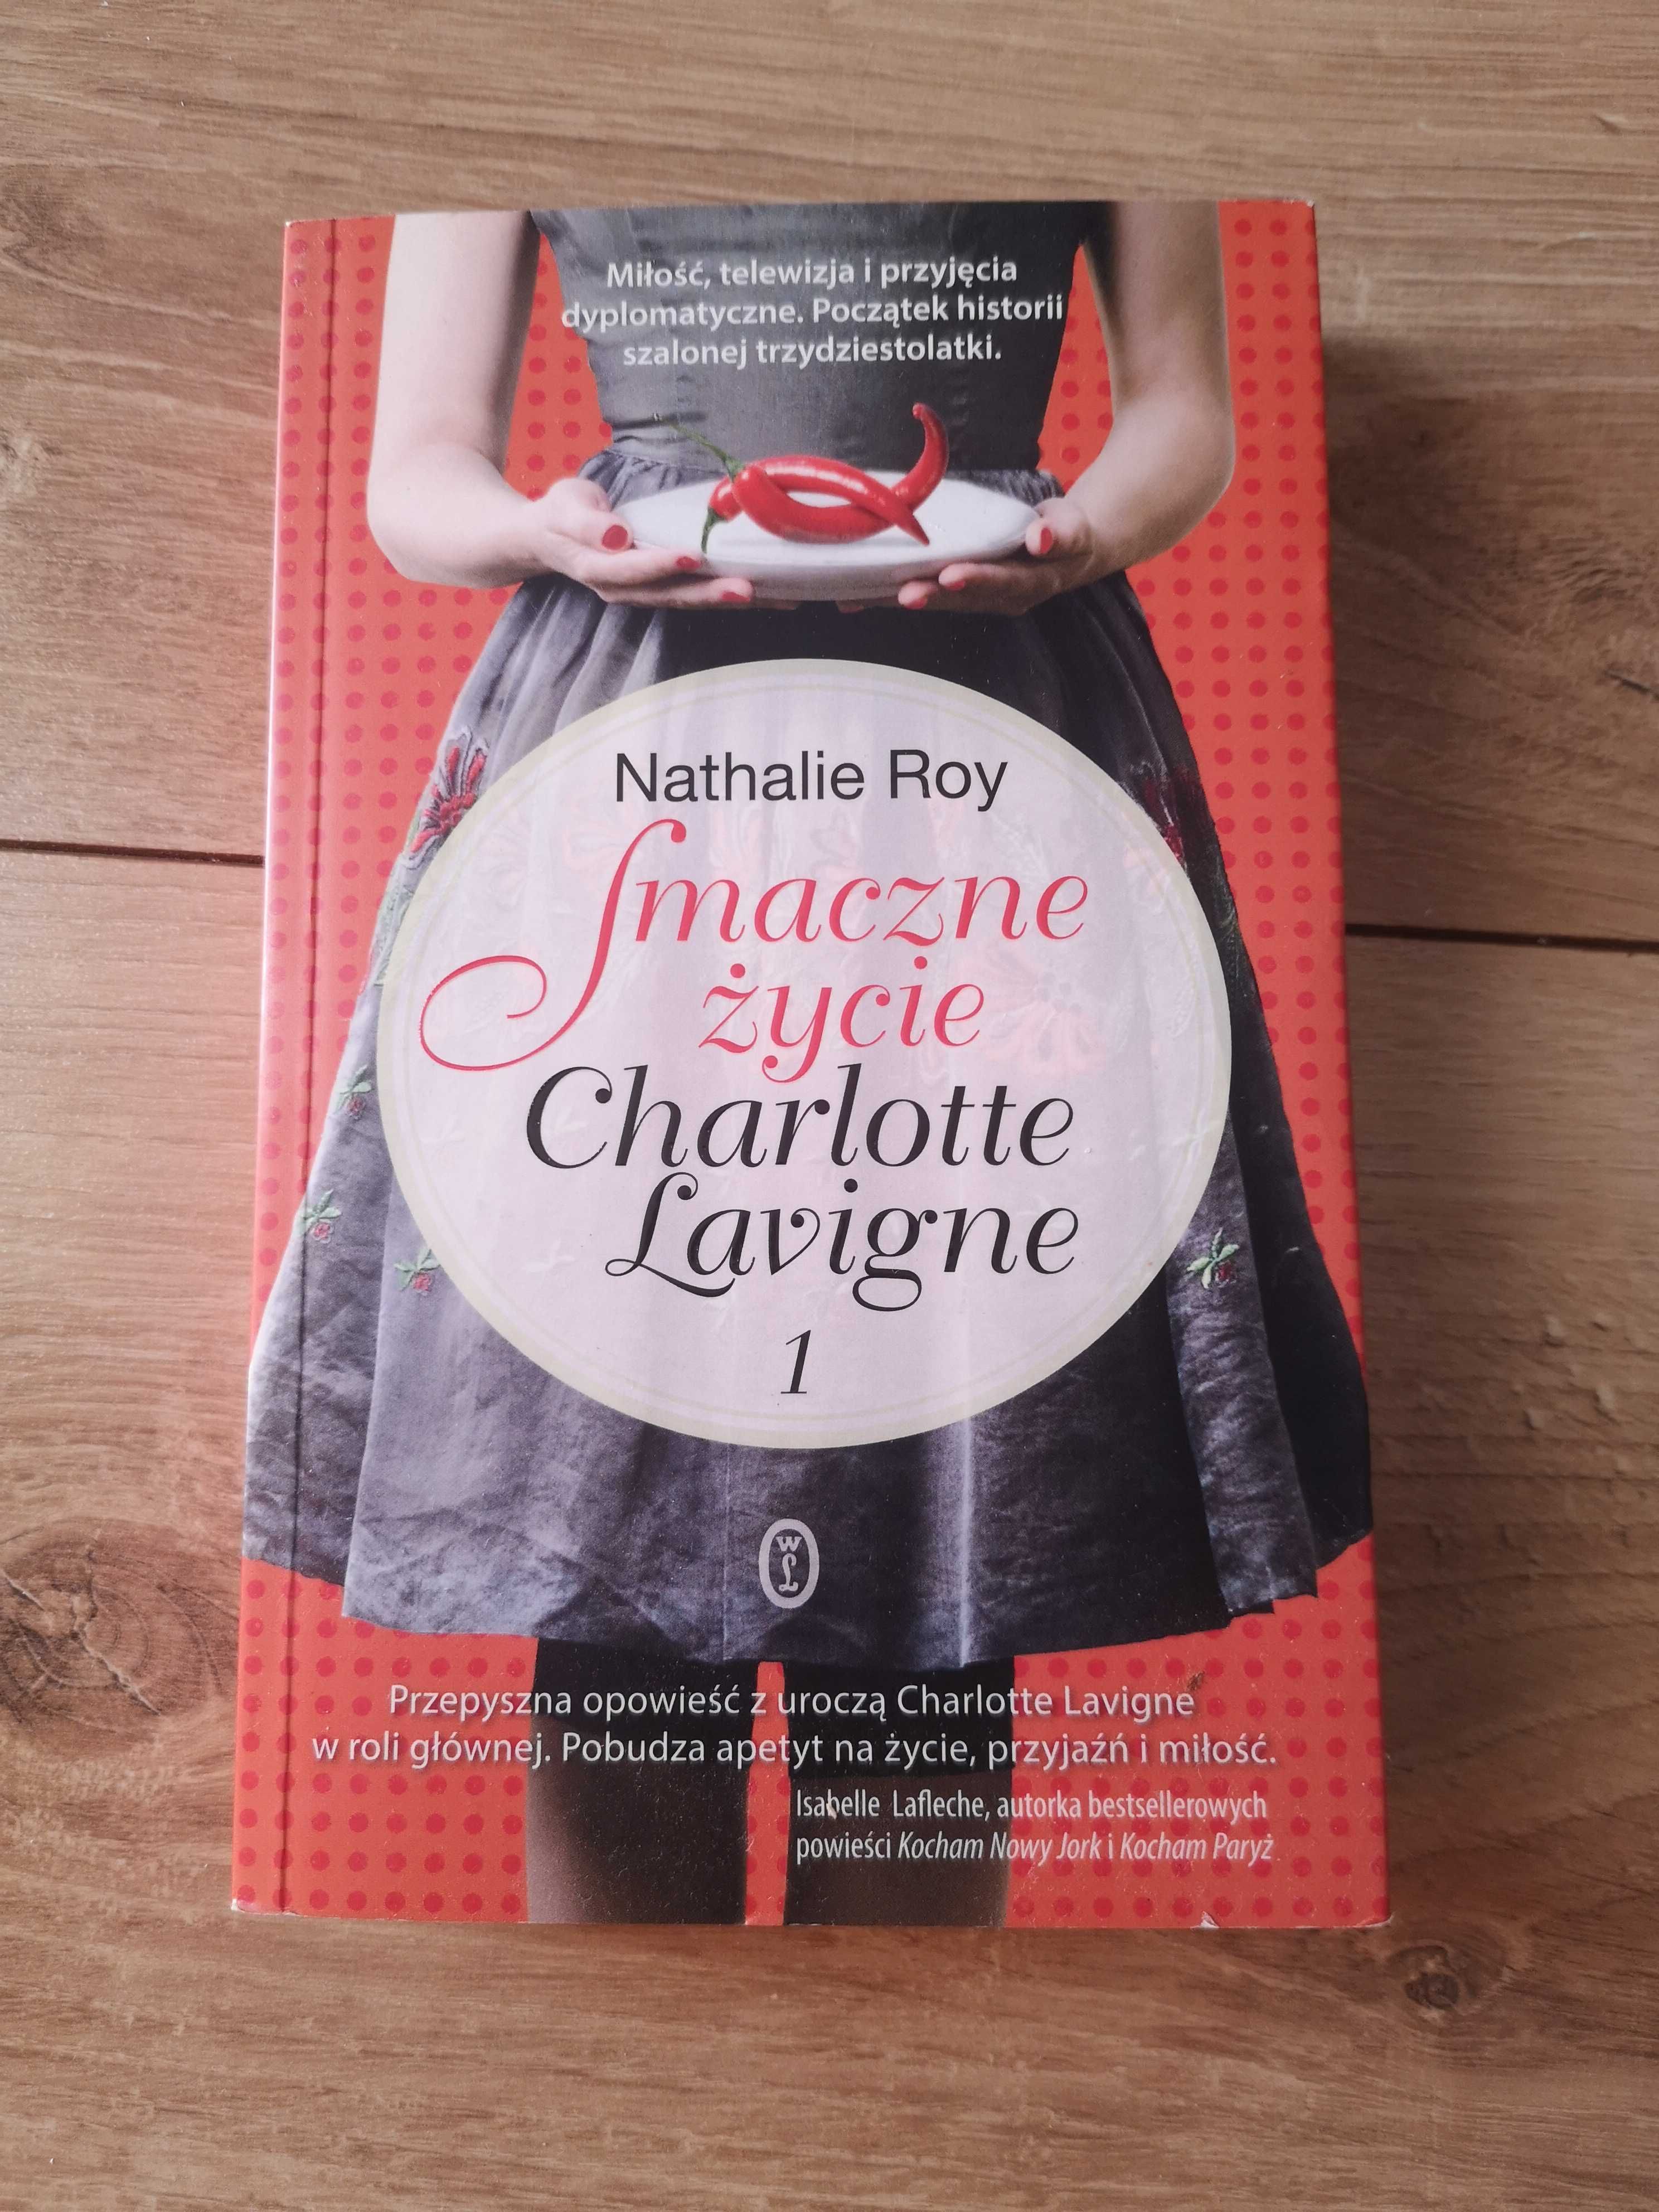 Książka, Nathalie Roy, Smaczne życie Charlotte Lavigne 1